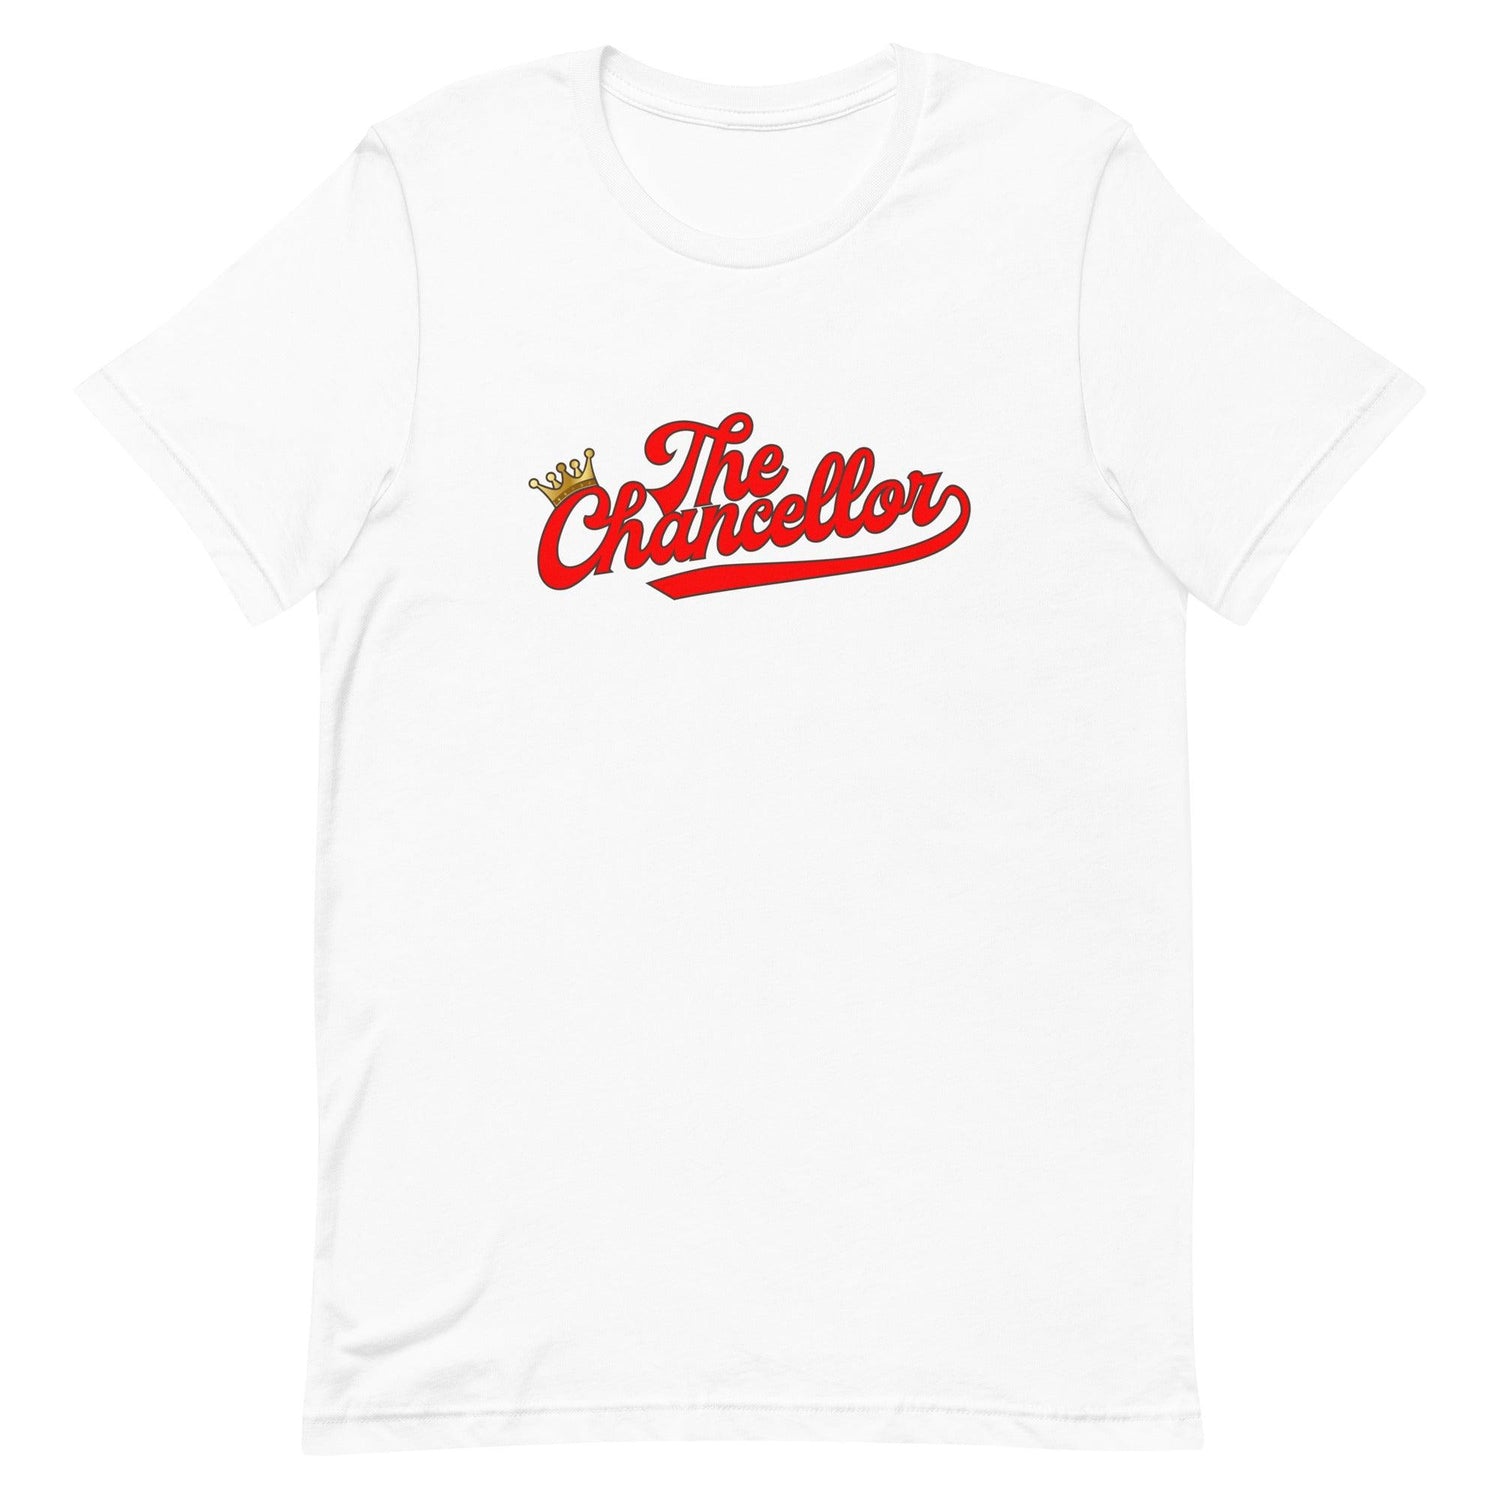 Chancellor Brewington "The Chancellor" t-shirt - Fan Arch